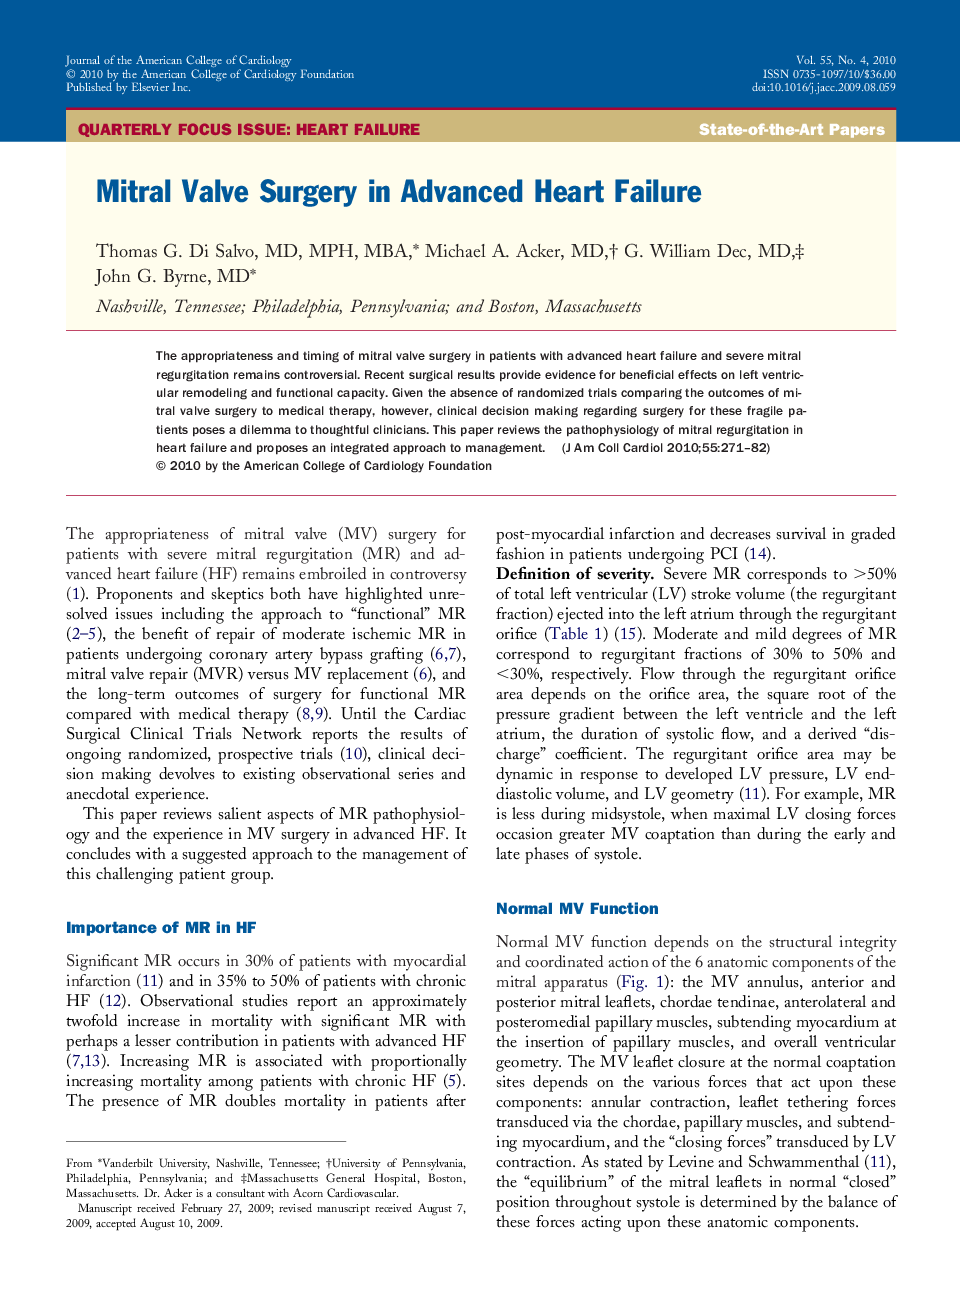 Mitral Valve Surgery in Advanced Heart Failure 